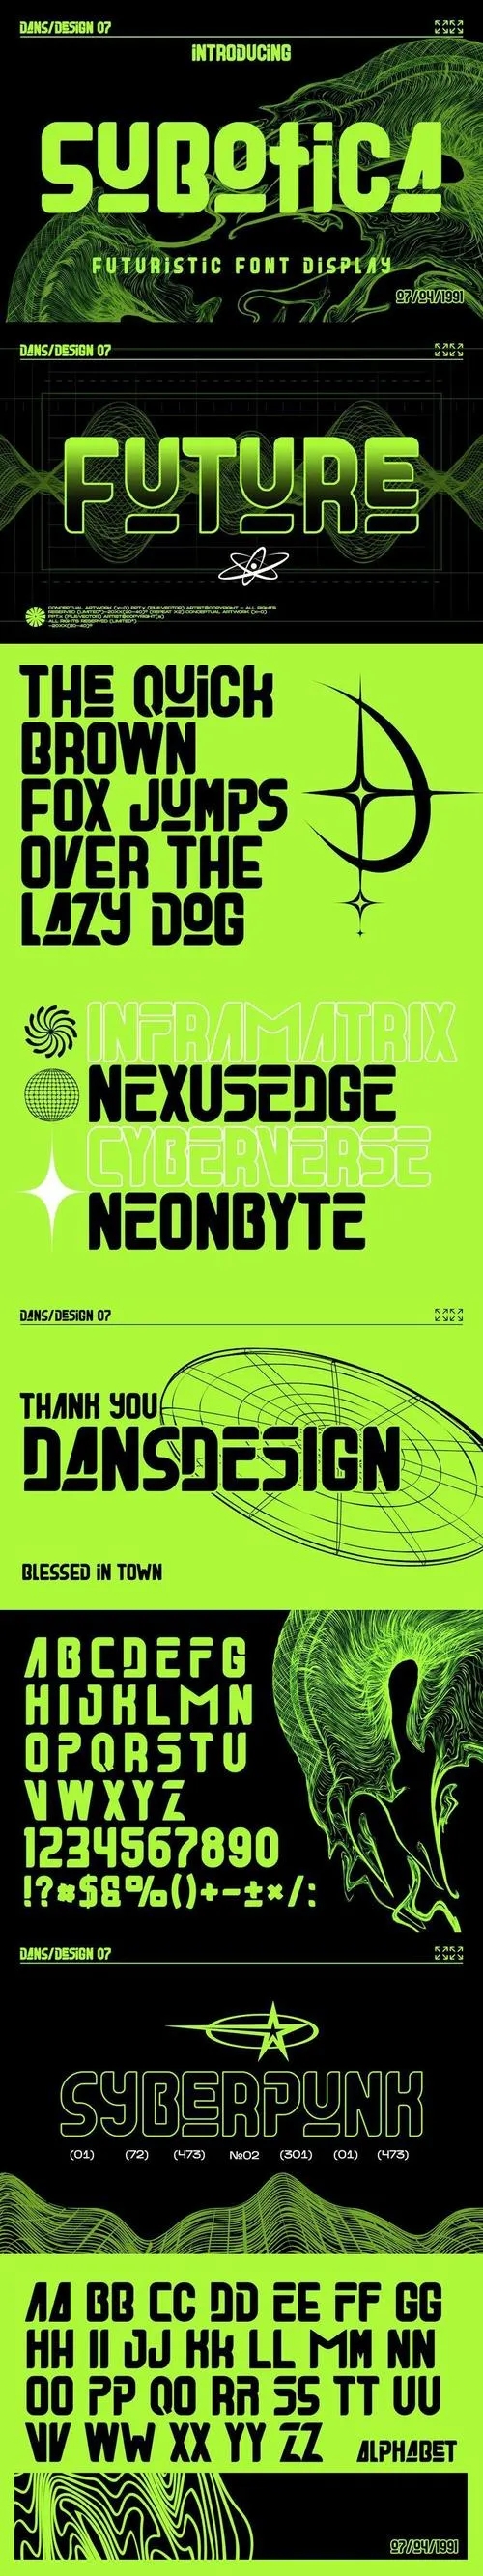 Subotica Futuristic Y2k Display Font